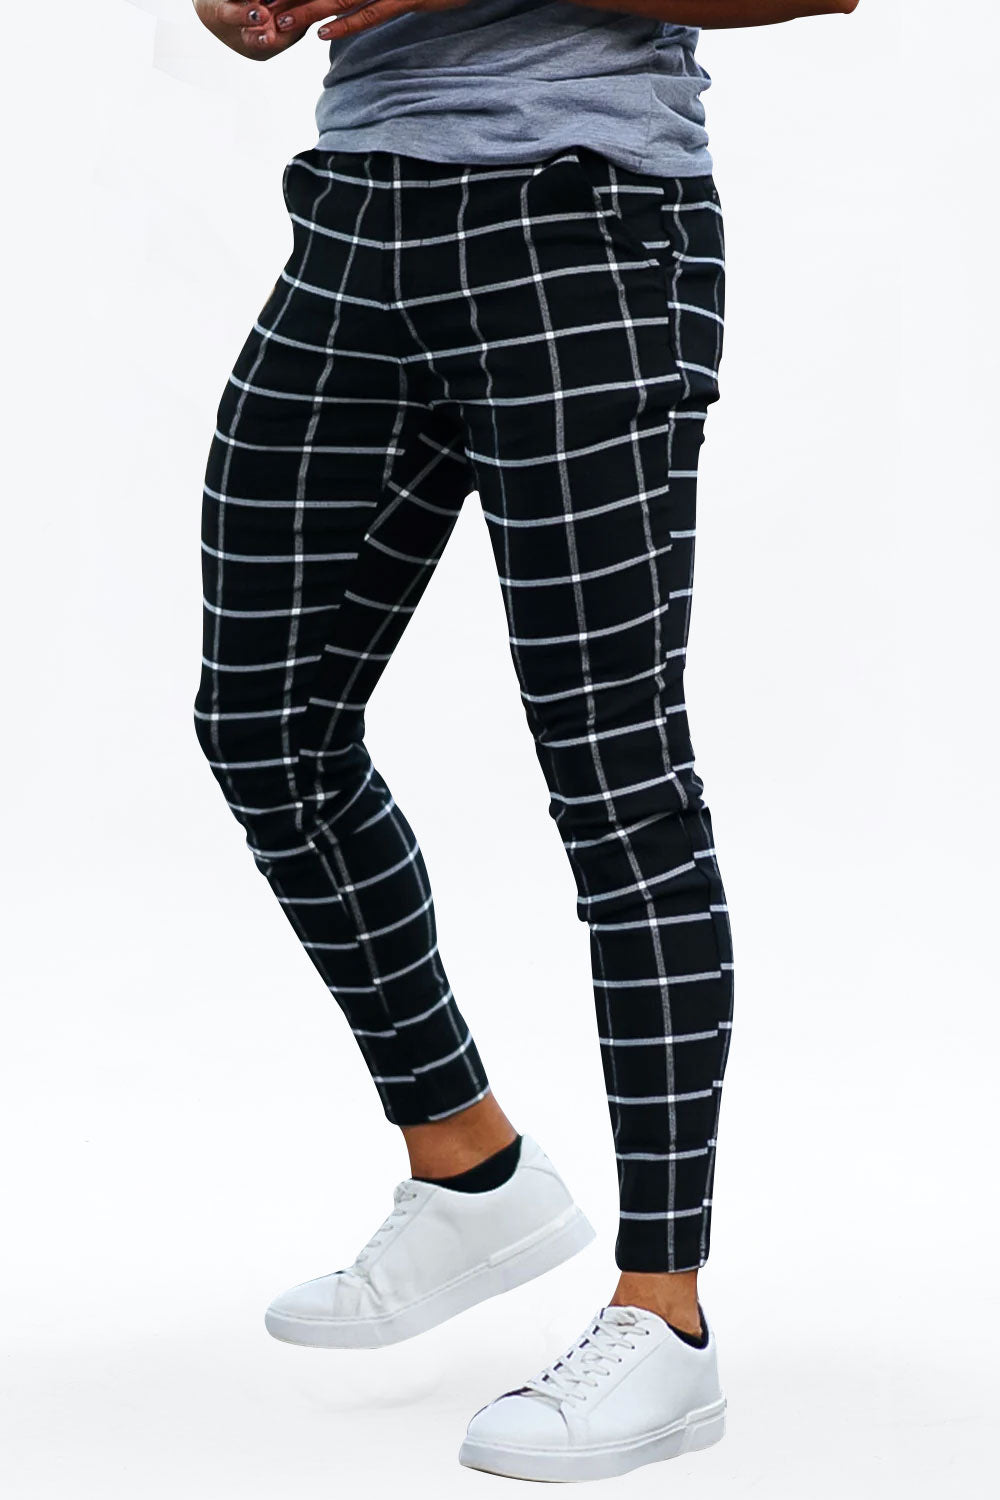 mens black and white checkered pants